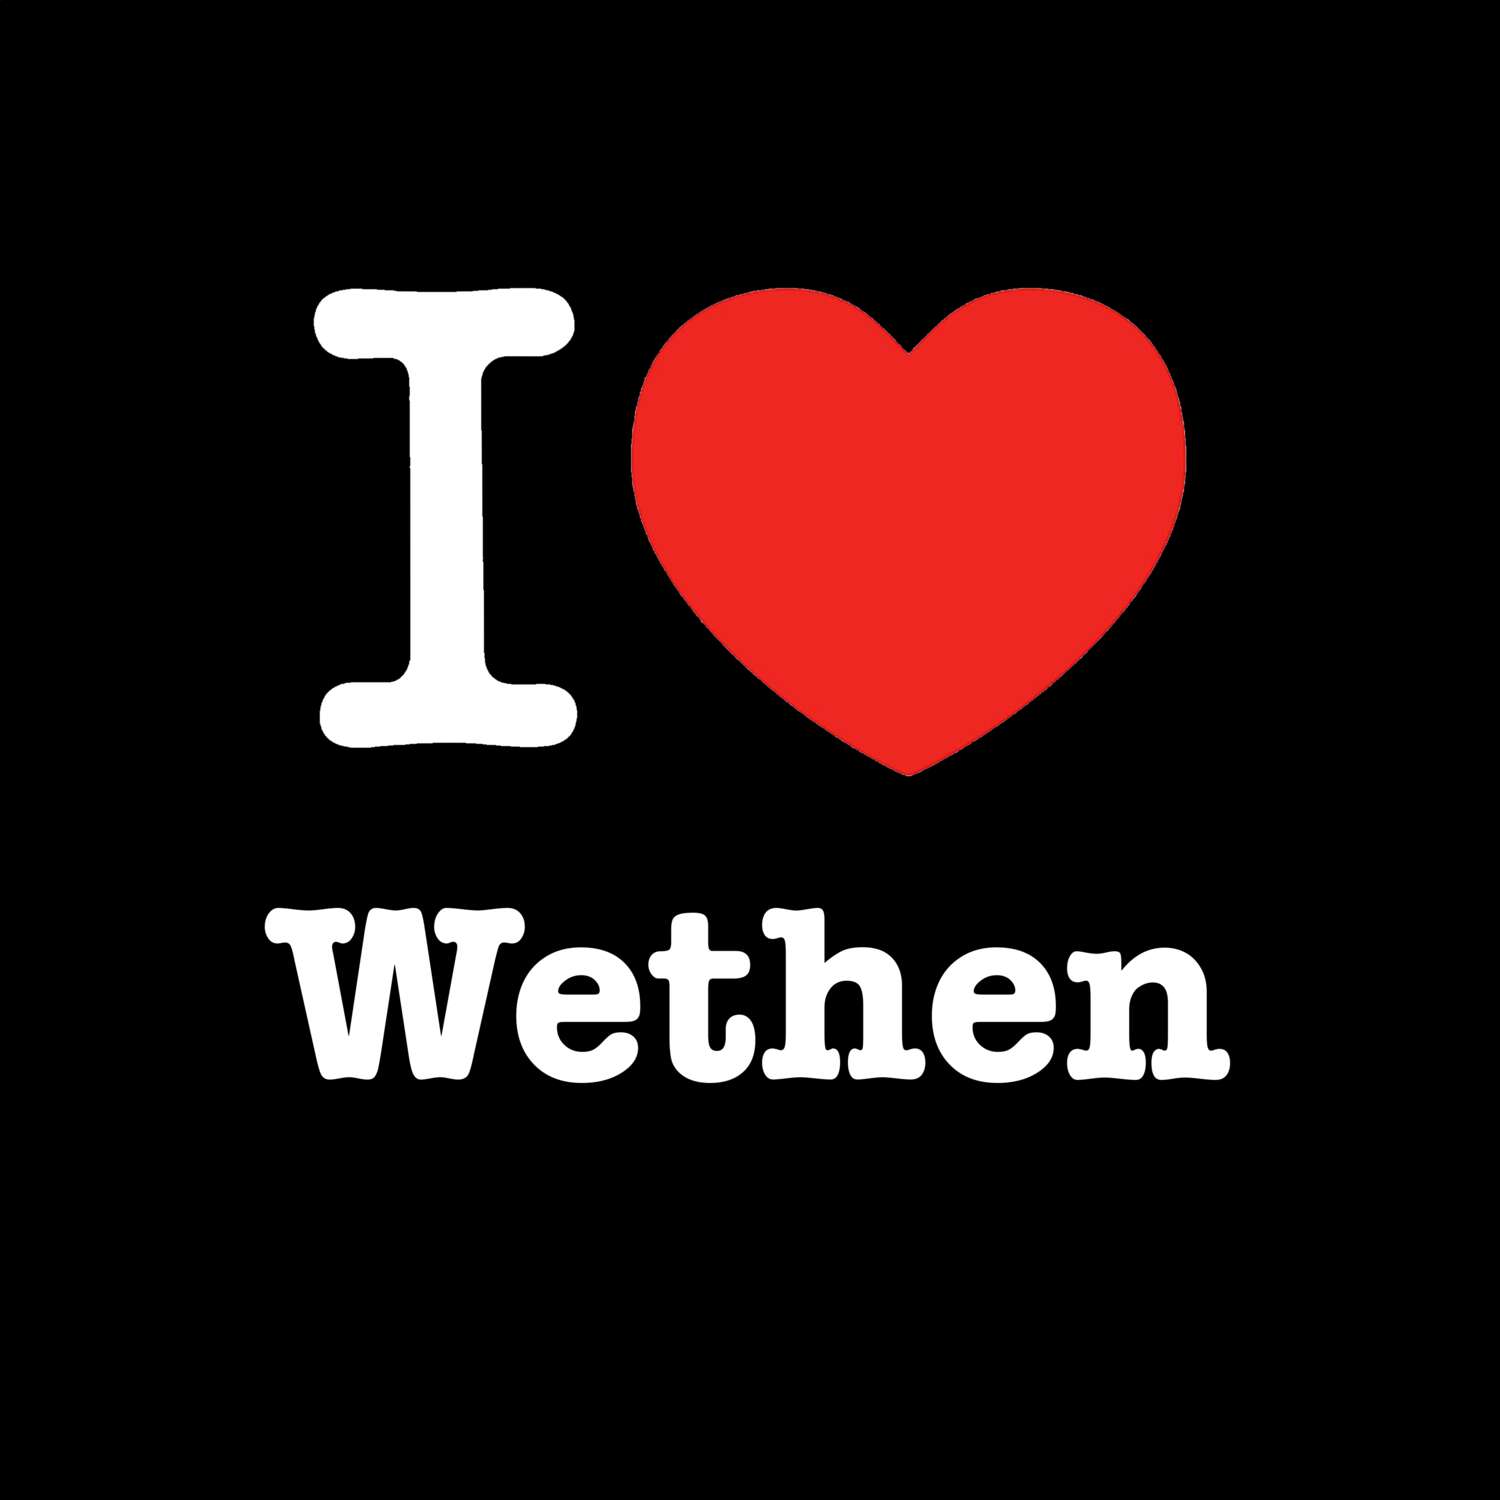 Wethen T-Shirt »I love«